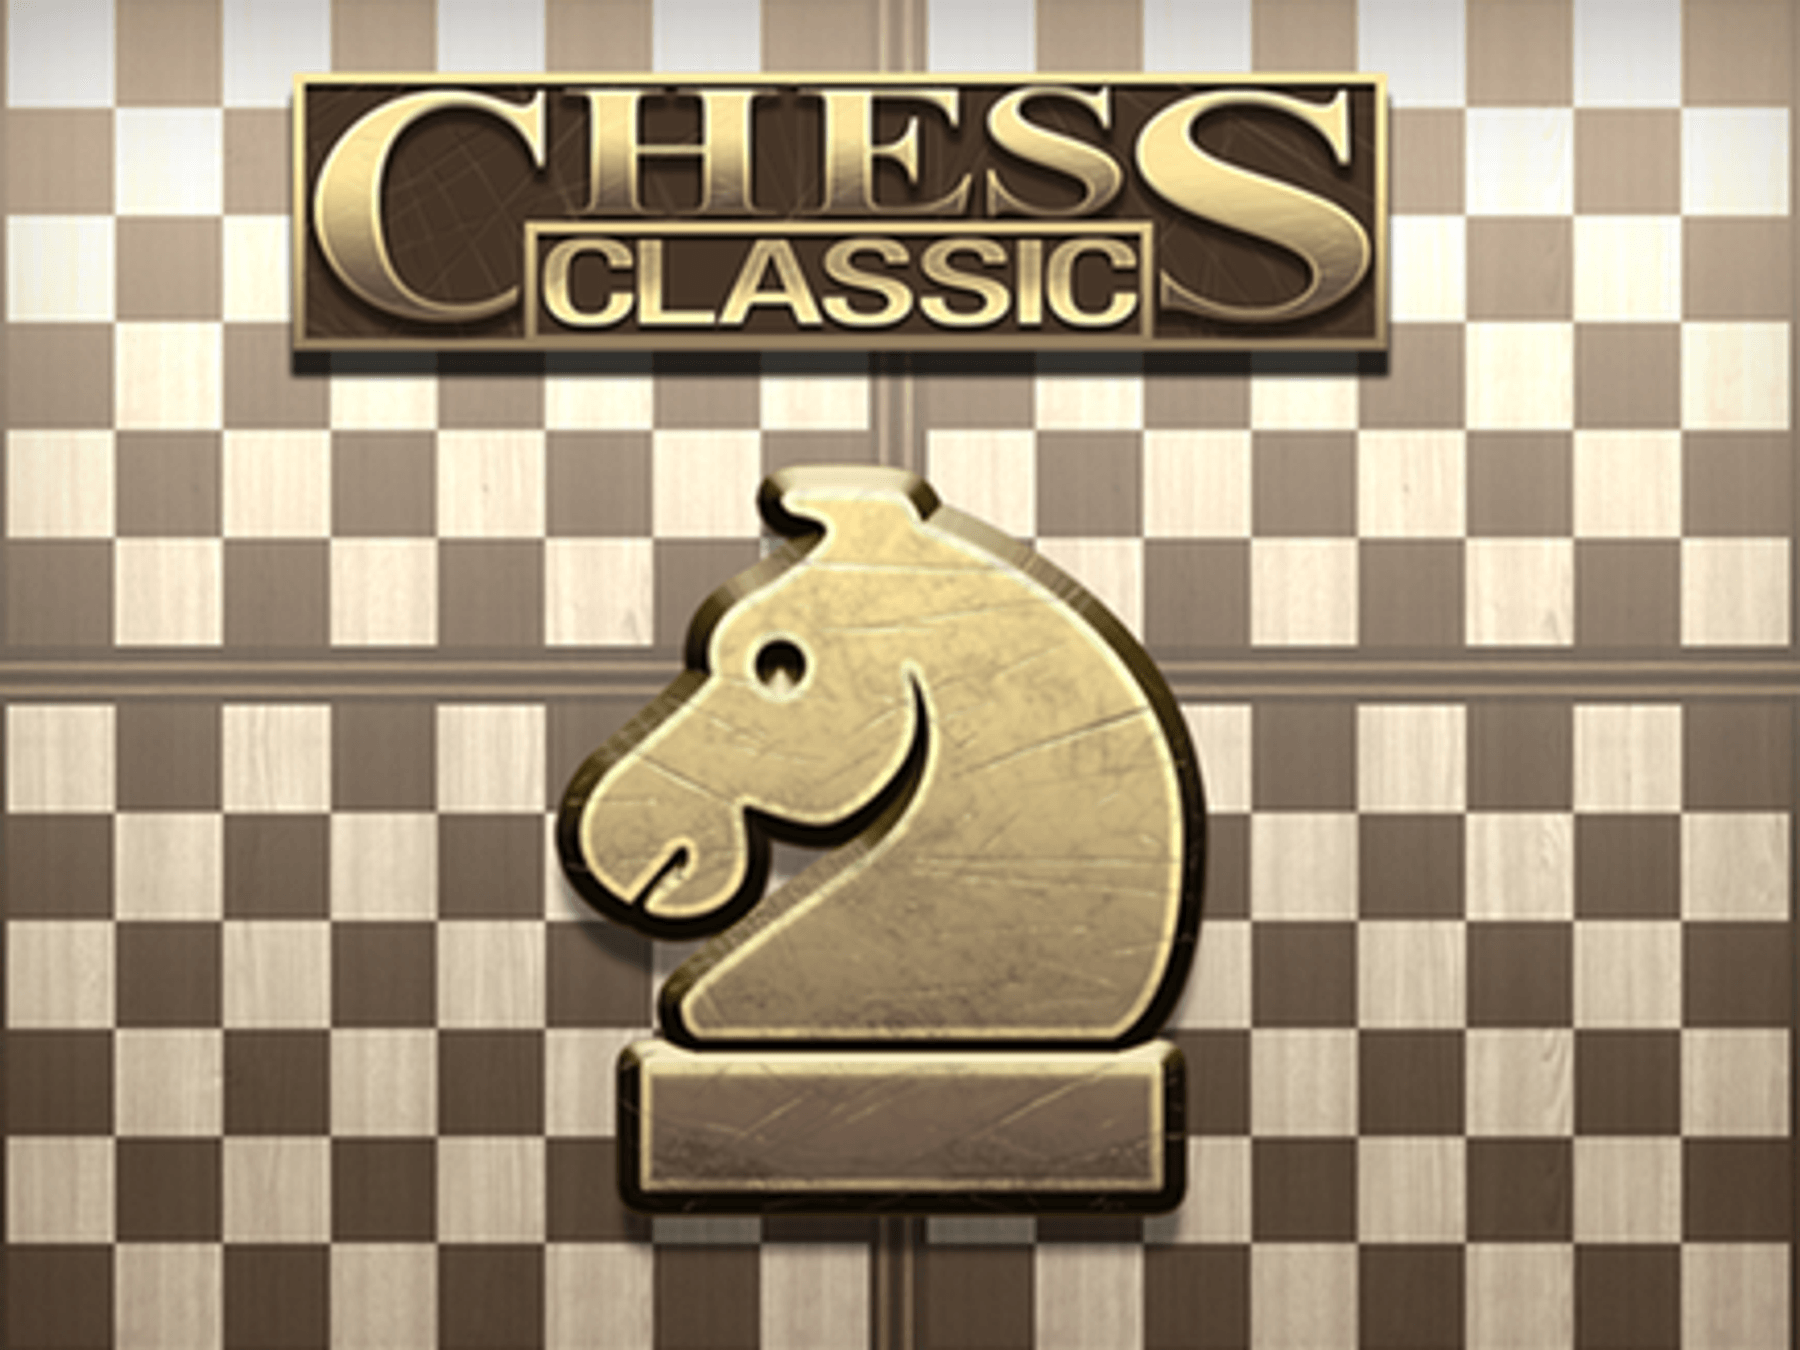 Chess Classic kostenlos online spielen bei t-online.de